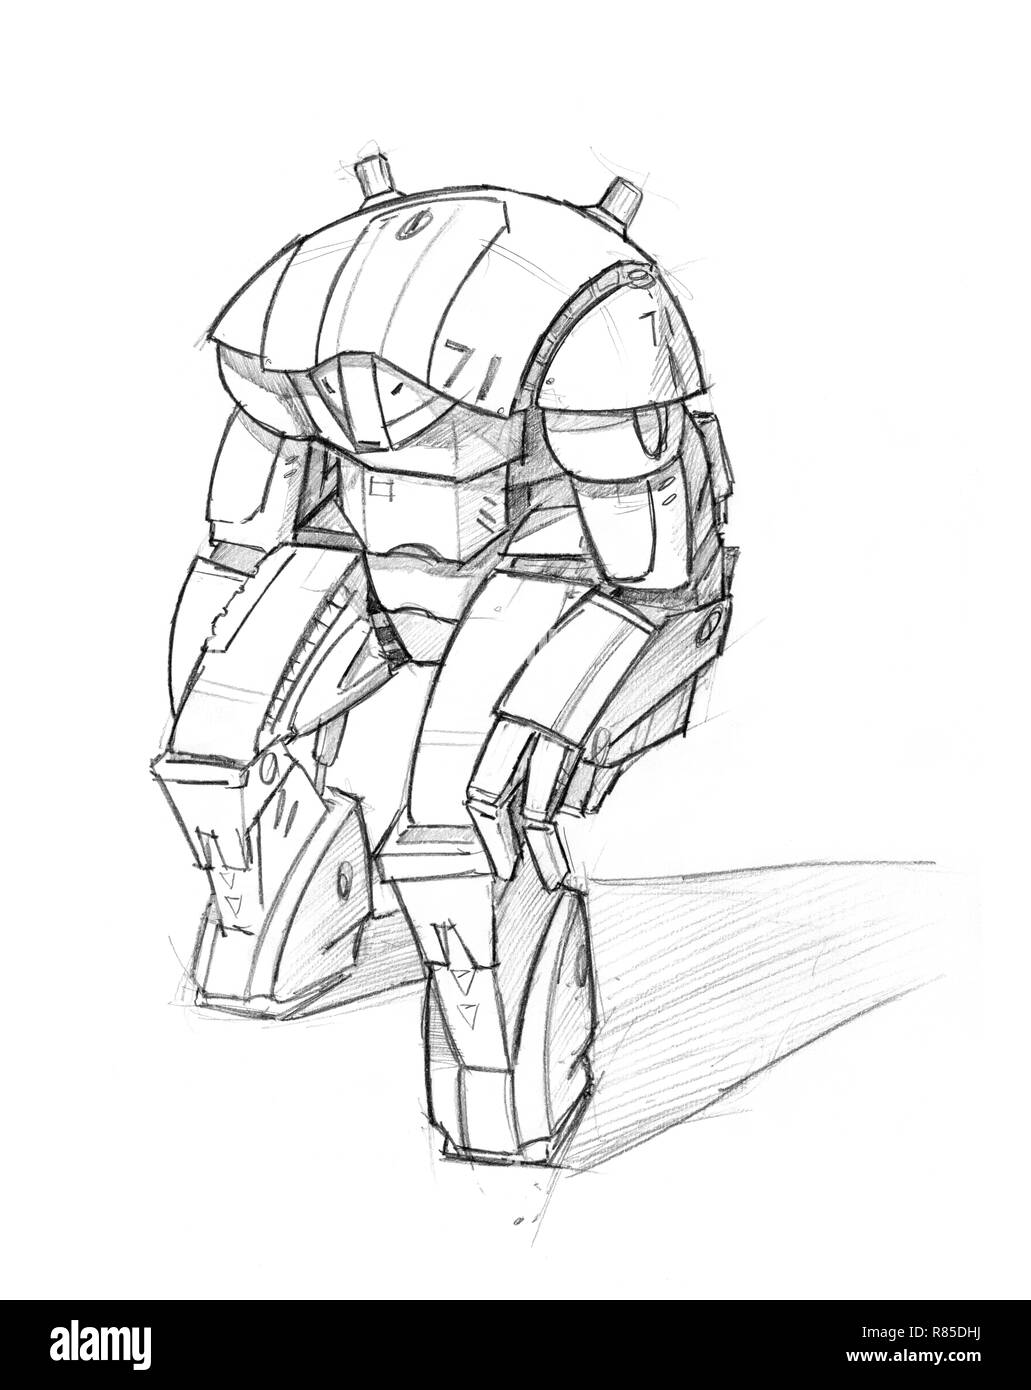 Black Grunge Rough Pencil Sketch of Robot Stock Photo